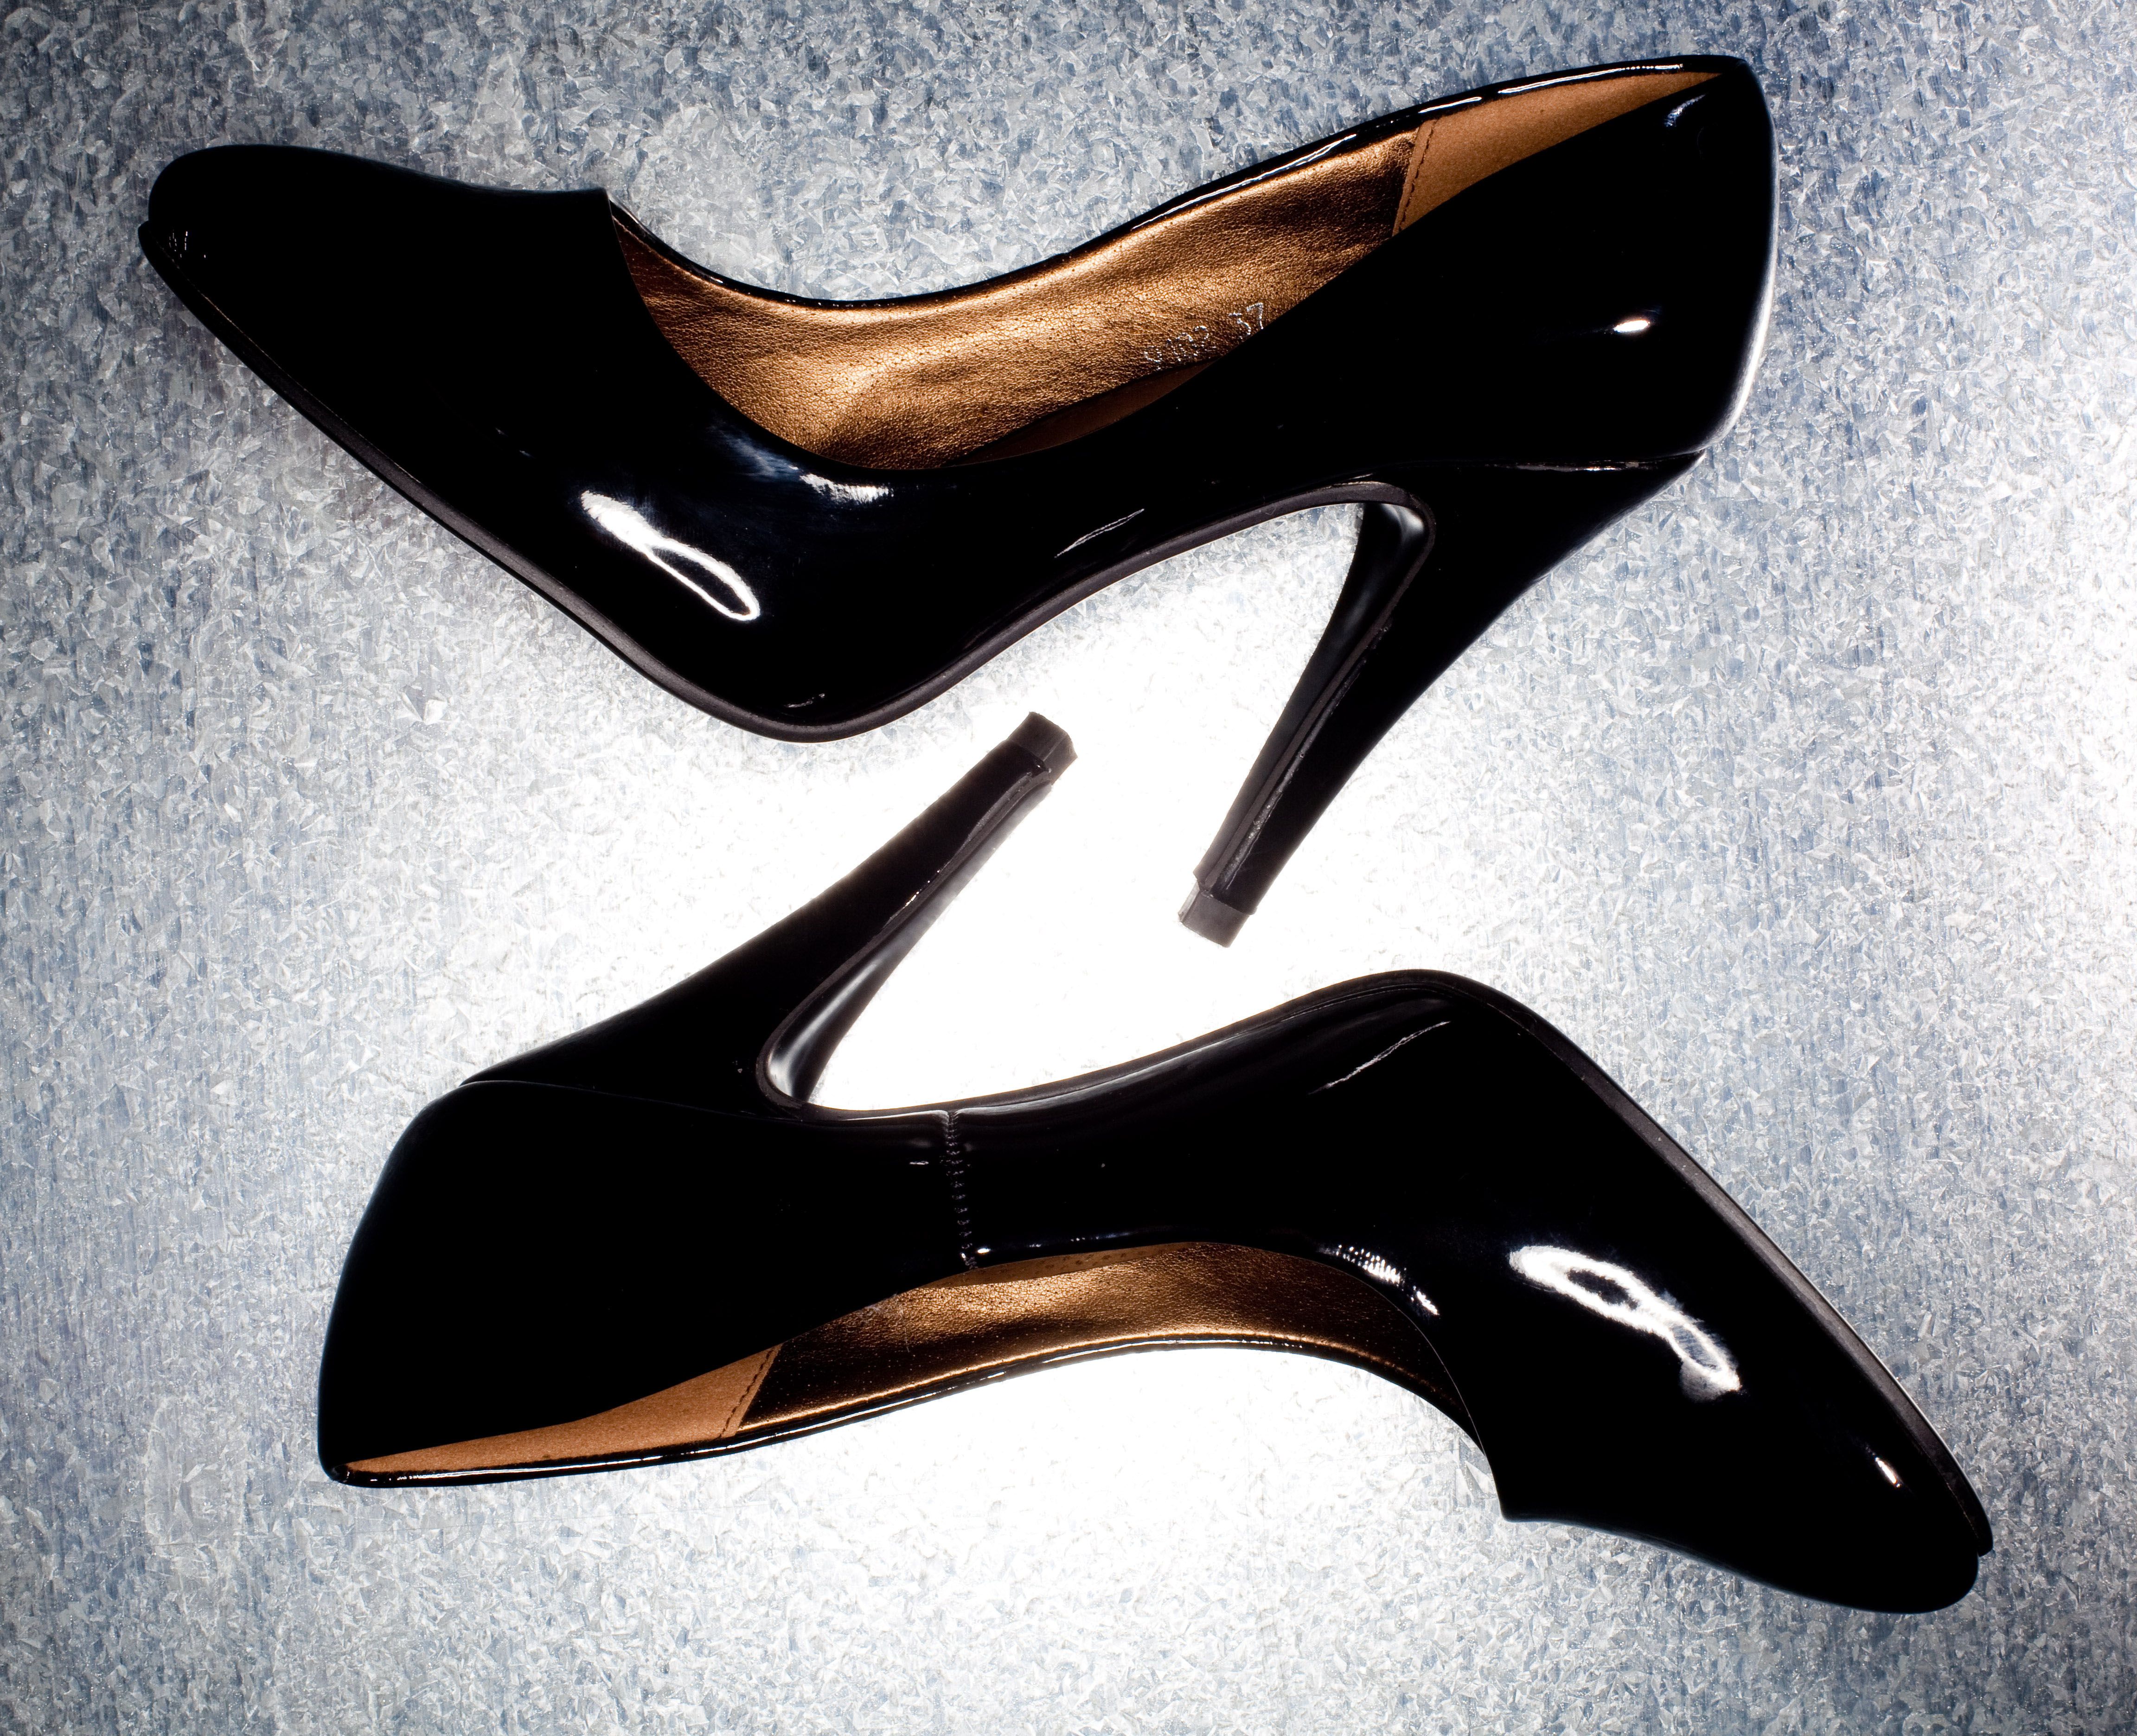 Black Heeled Sandals For Women Online – Buy Black Heeled Sandals Online in  India